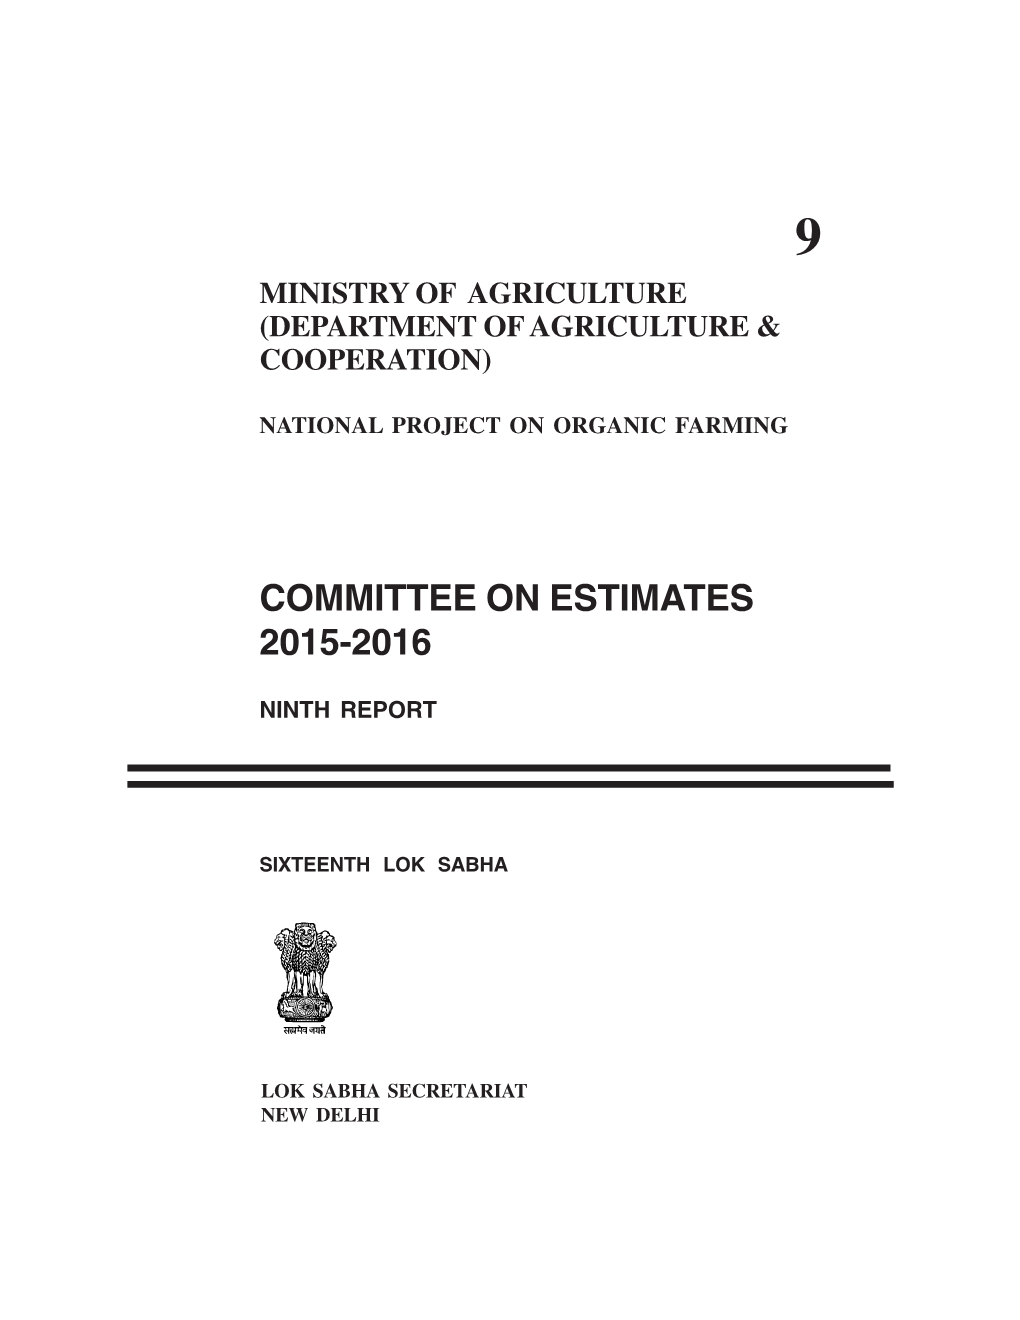 Committee on Estimates 2015-2016